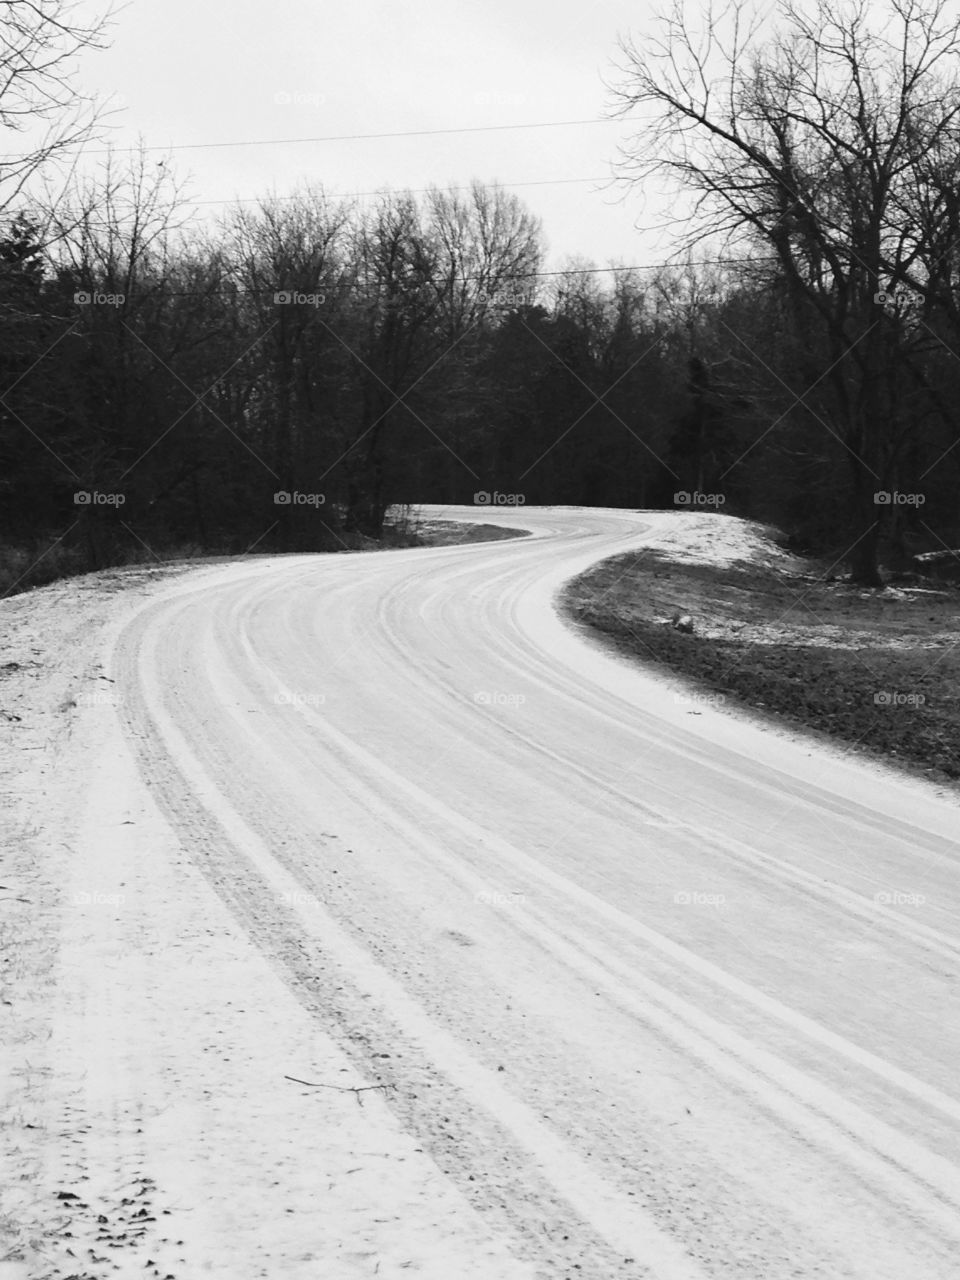 Snowy road
Black&white